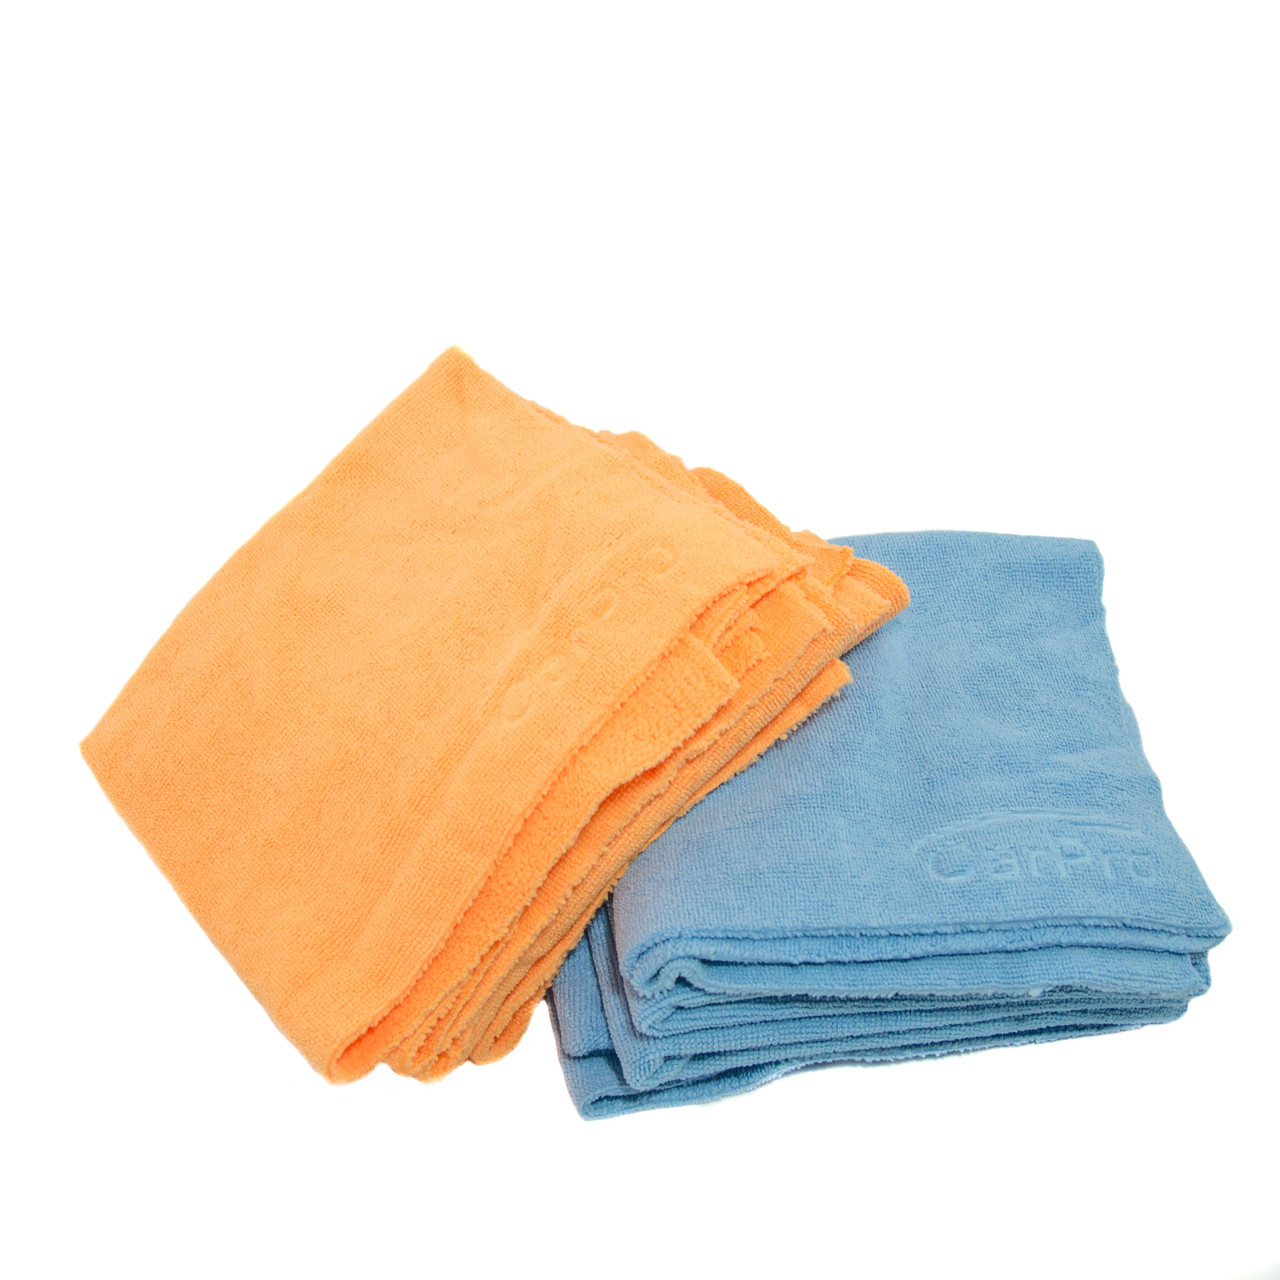 Ceramic Waterless Wash with Orange Towel - 22 oz.